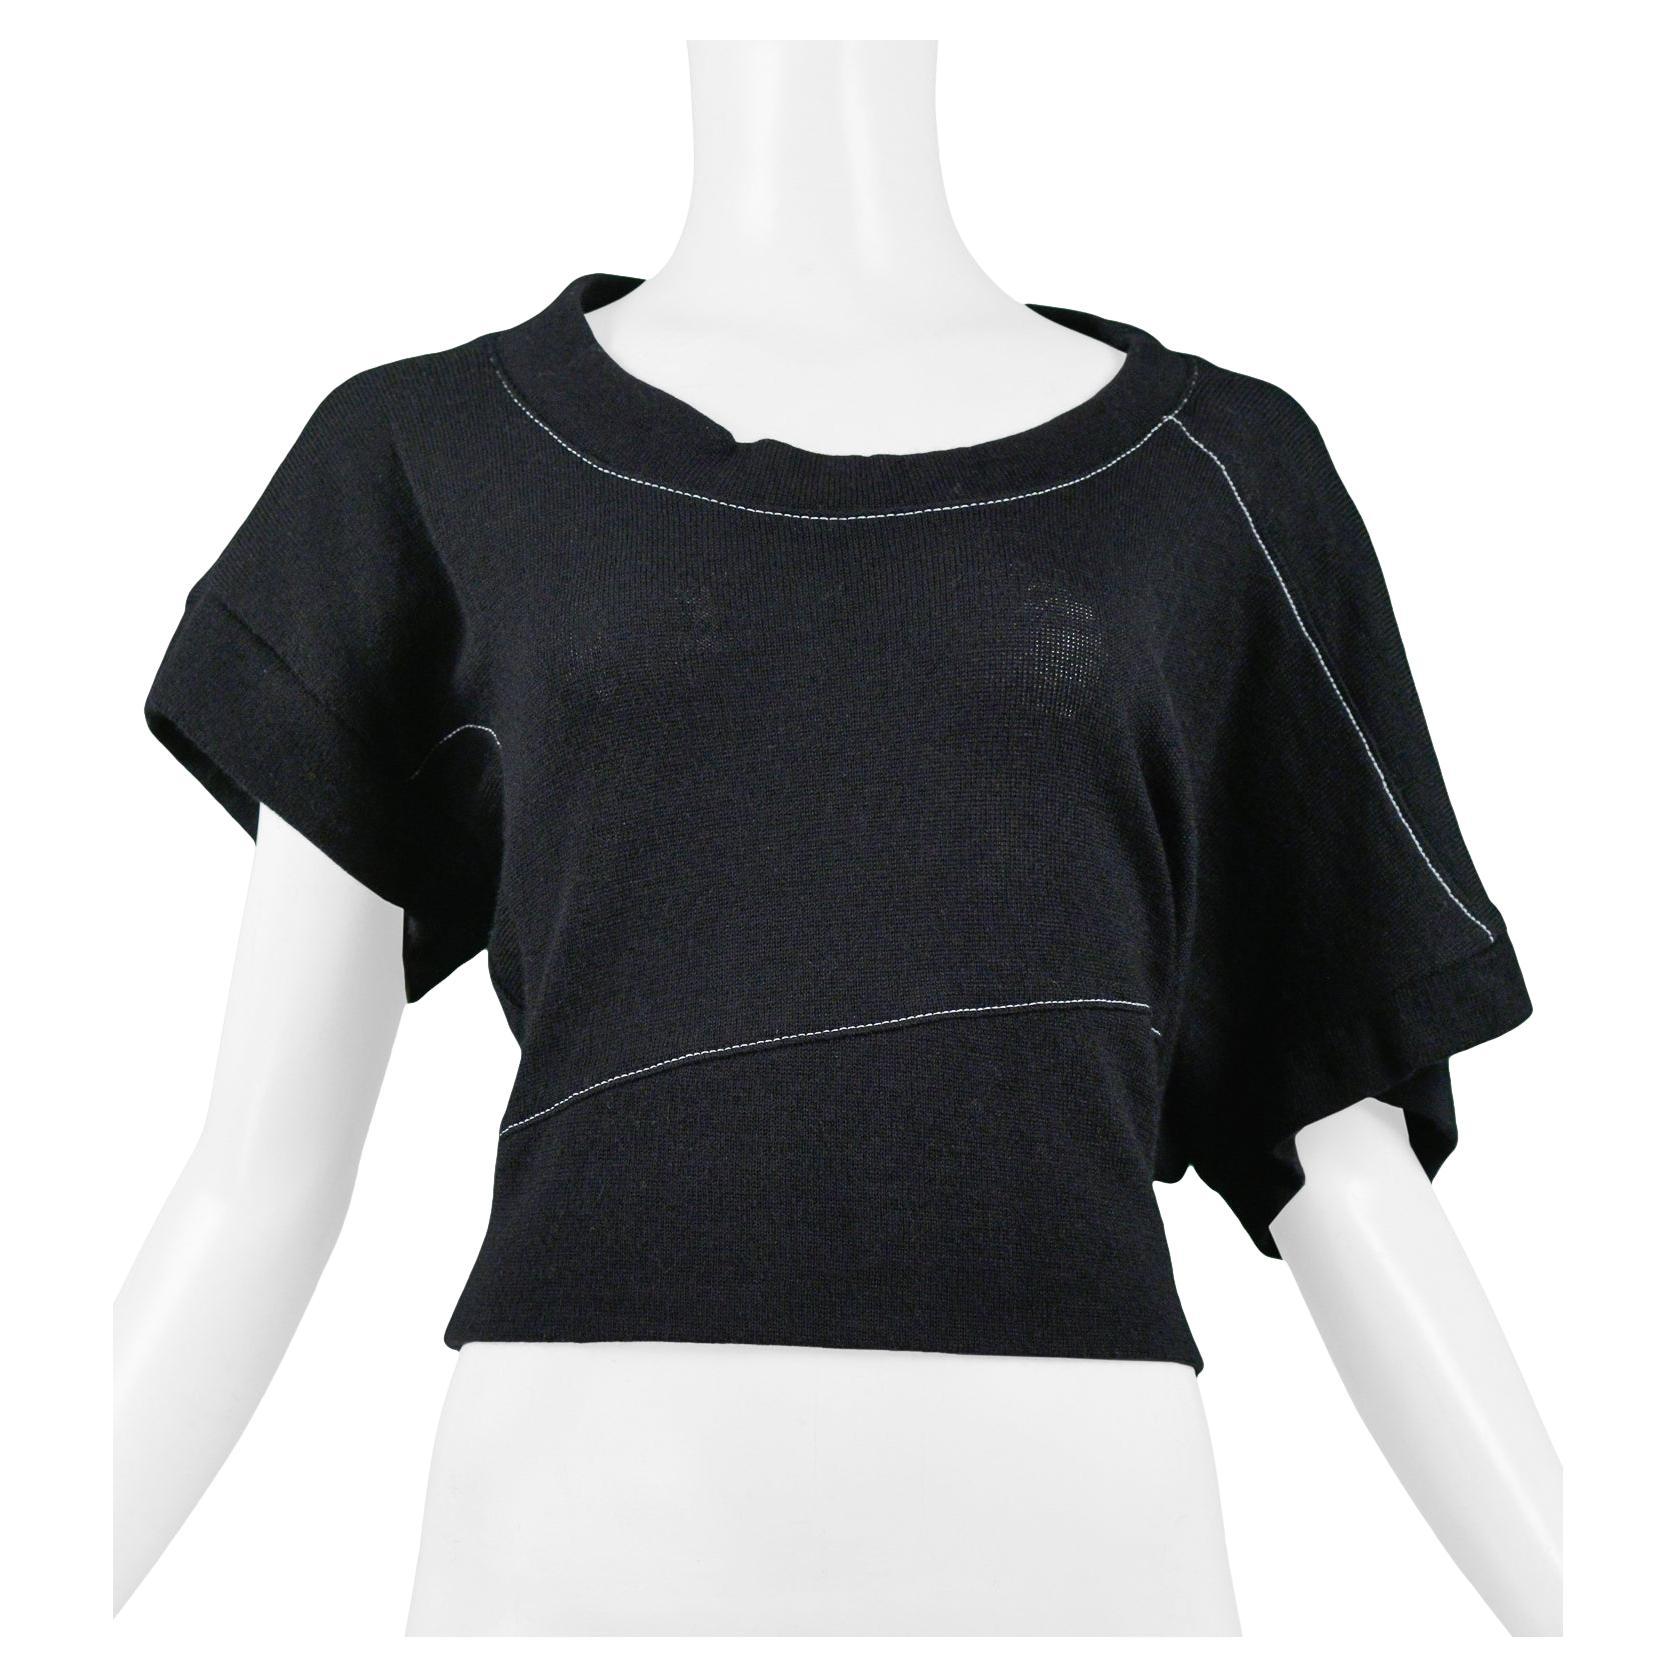 Balenciaga Black Asymmetrical Sweater With White Stitching 2002 For Sale